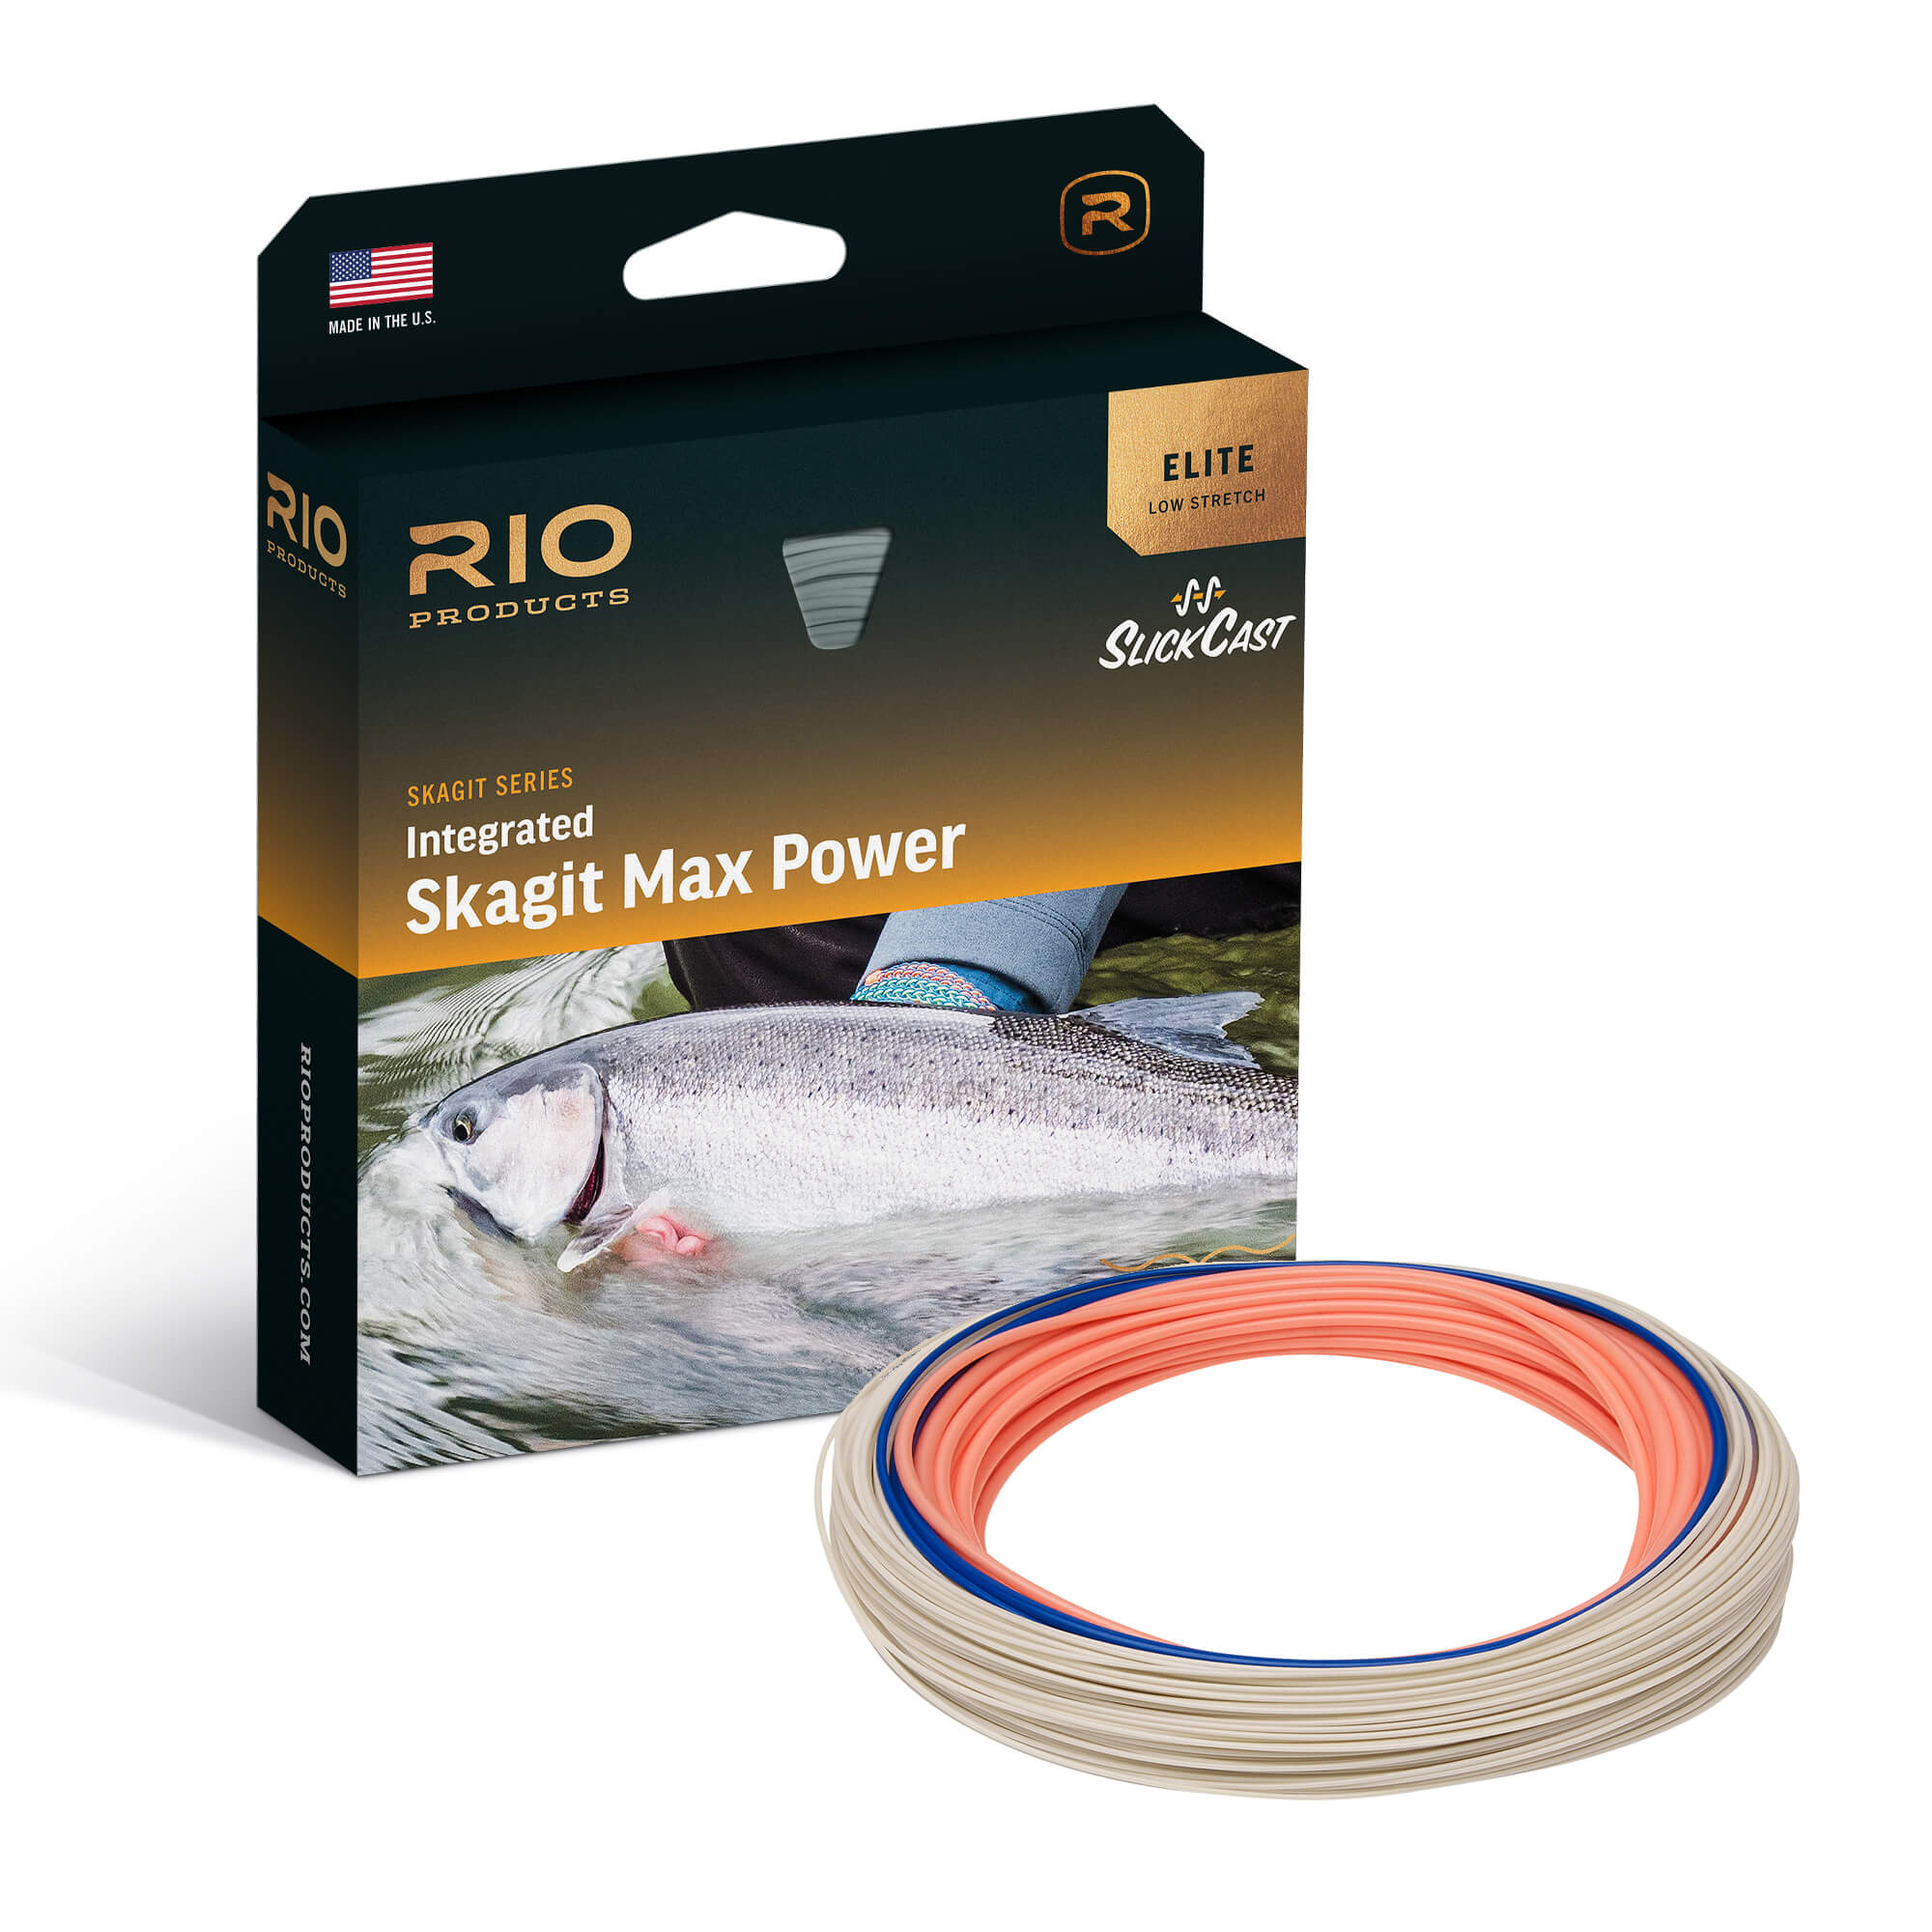 RIO ELITE INTEGRATED SKAGIT MAX POWER – Guide Flyfishing, Fly Fishing  Rods, Reels, Sage, Redington, RIO